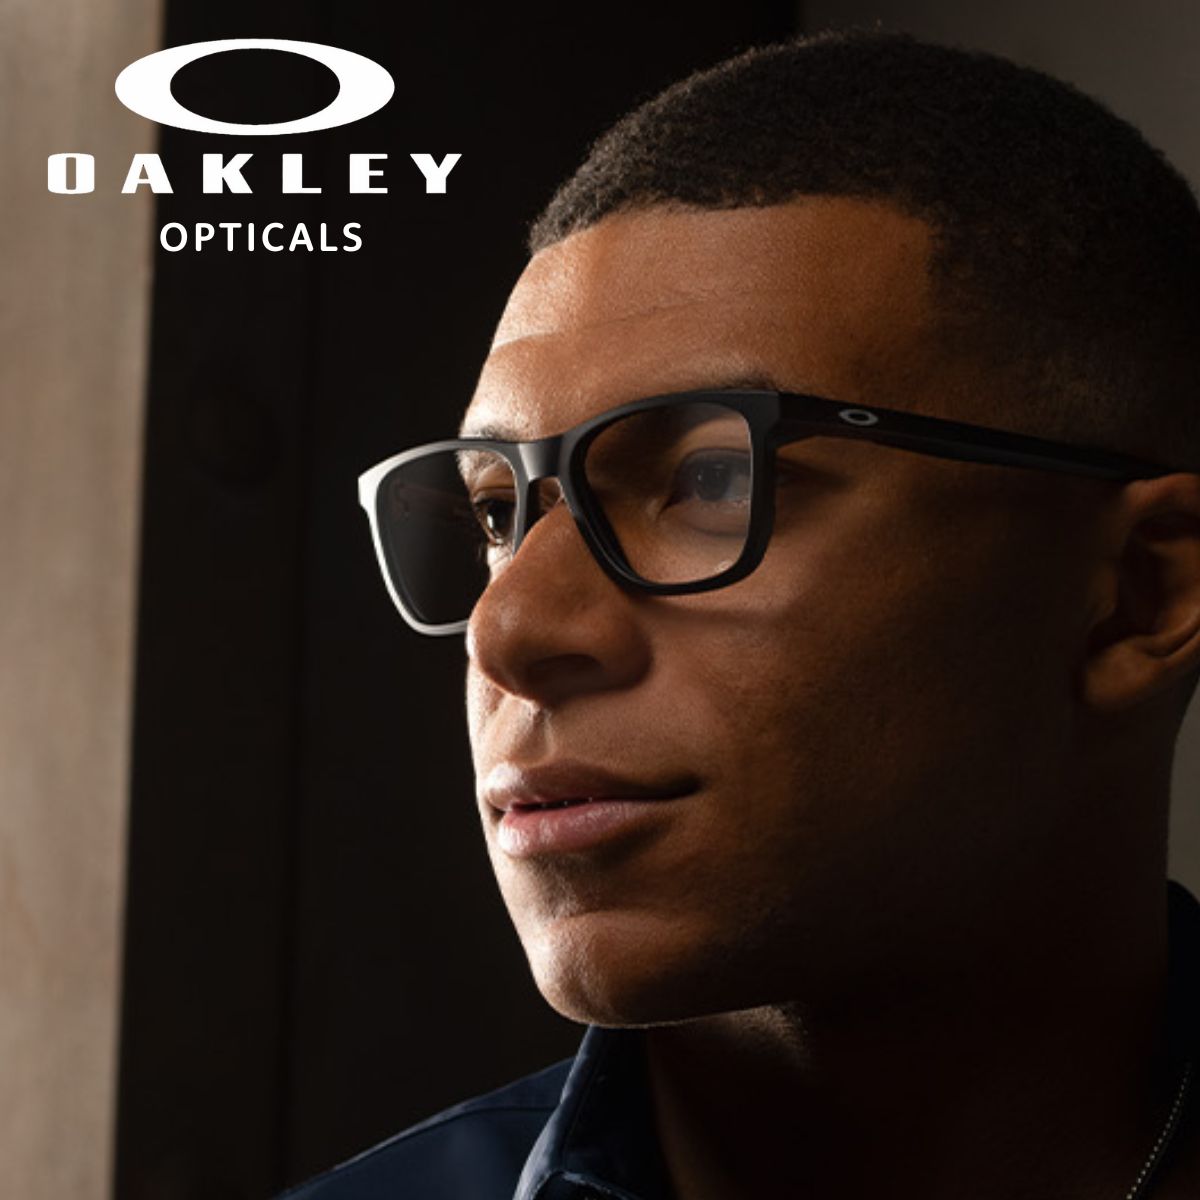 "Oakley Eyeglasses-Optical frames Online Best Price"